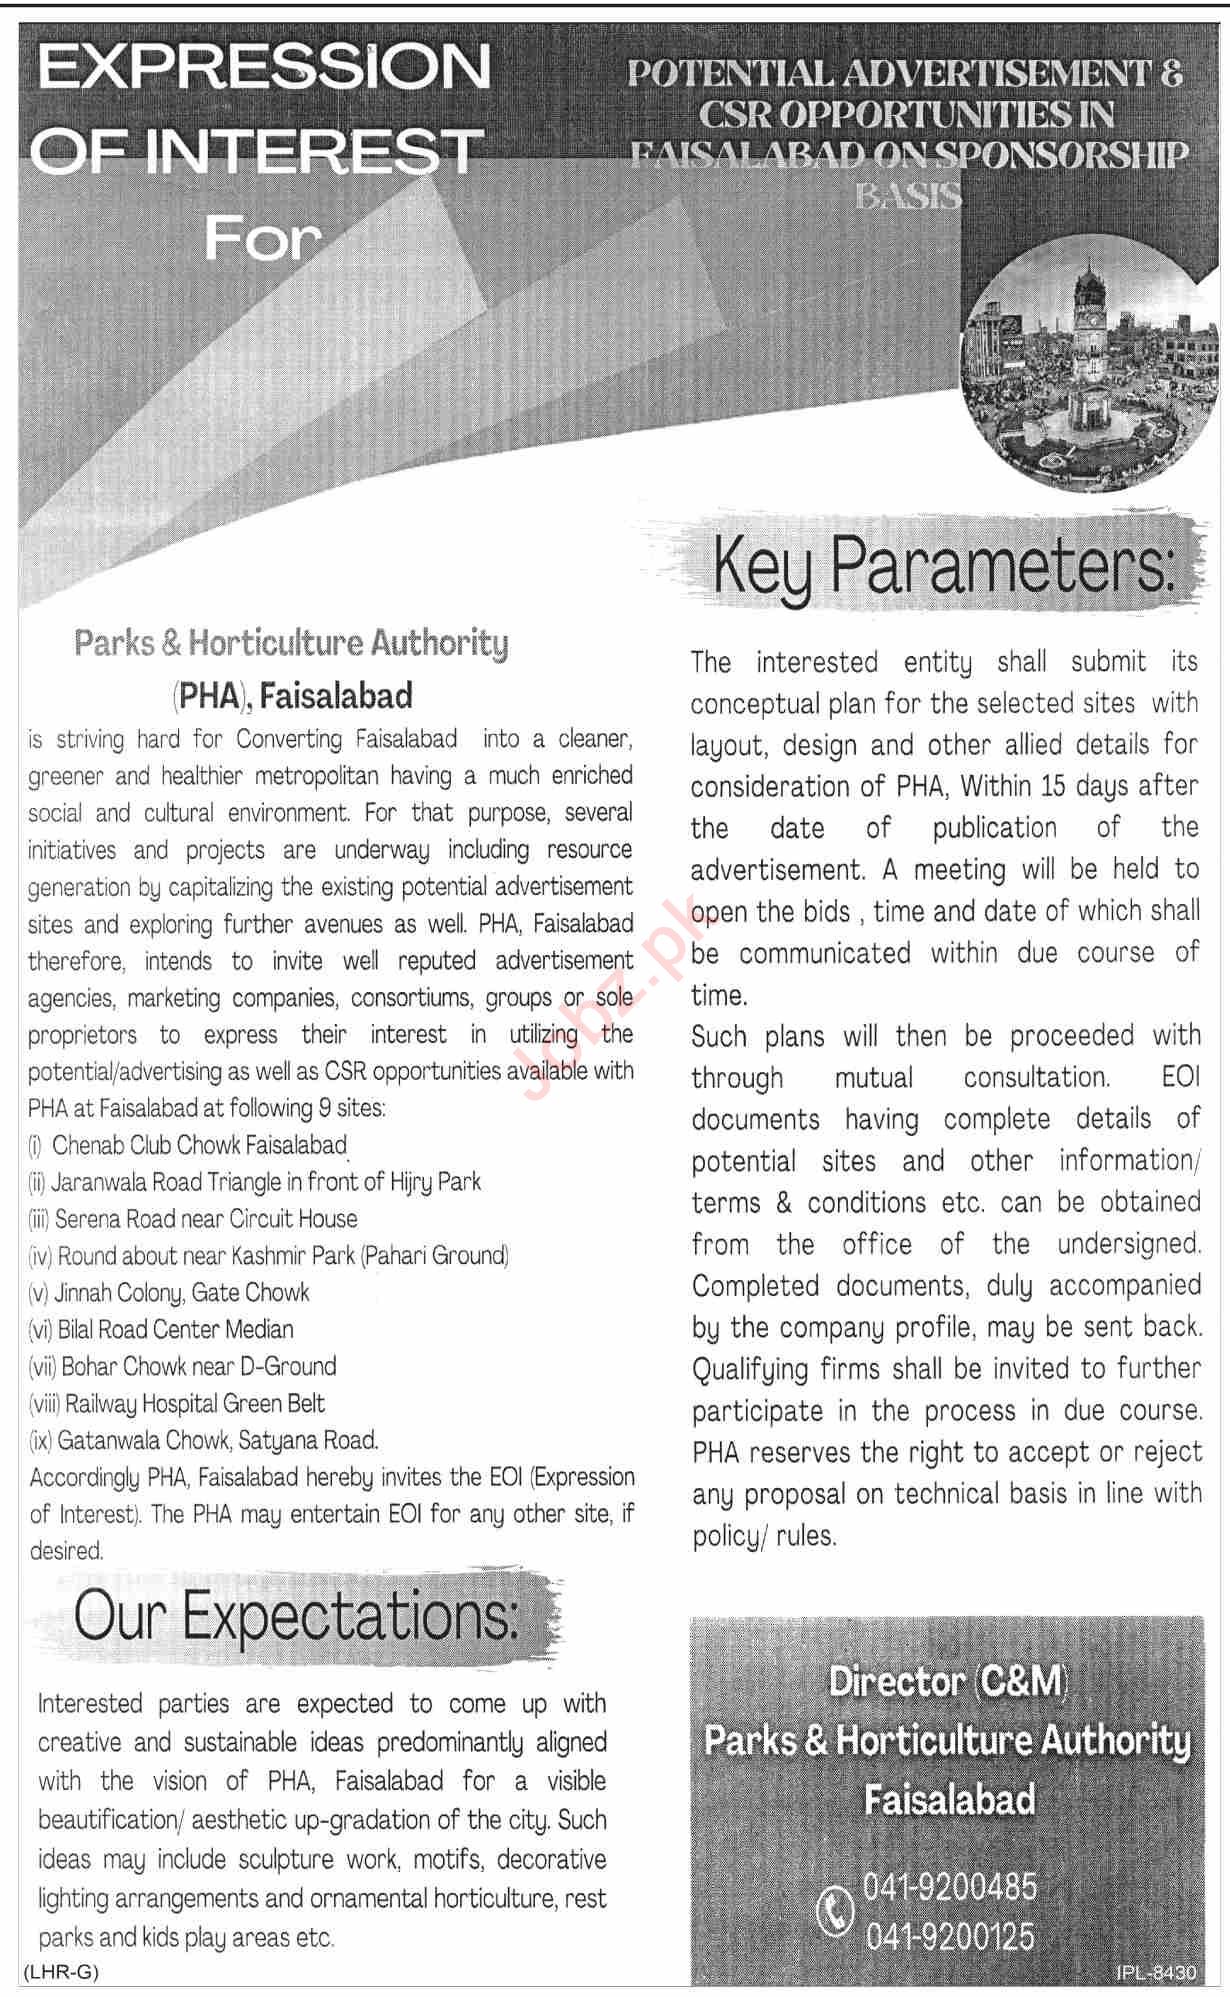 Latest Parks & Horticulture Authority Management Posts Faisalabad 2022